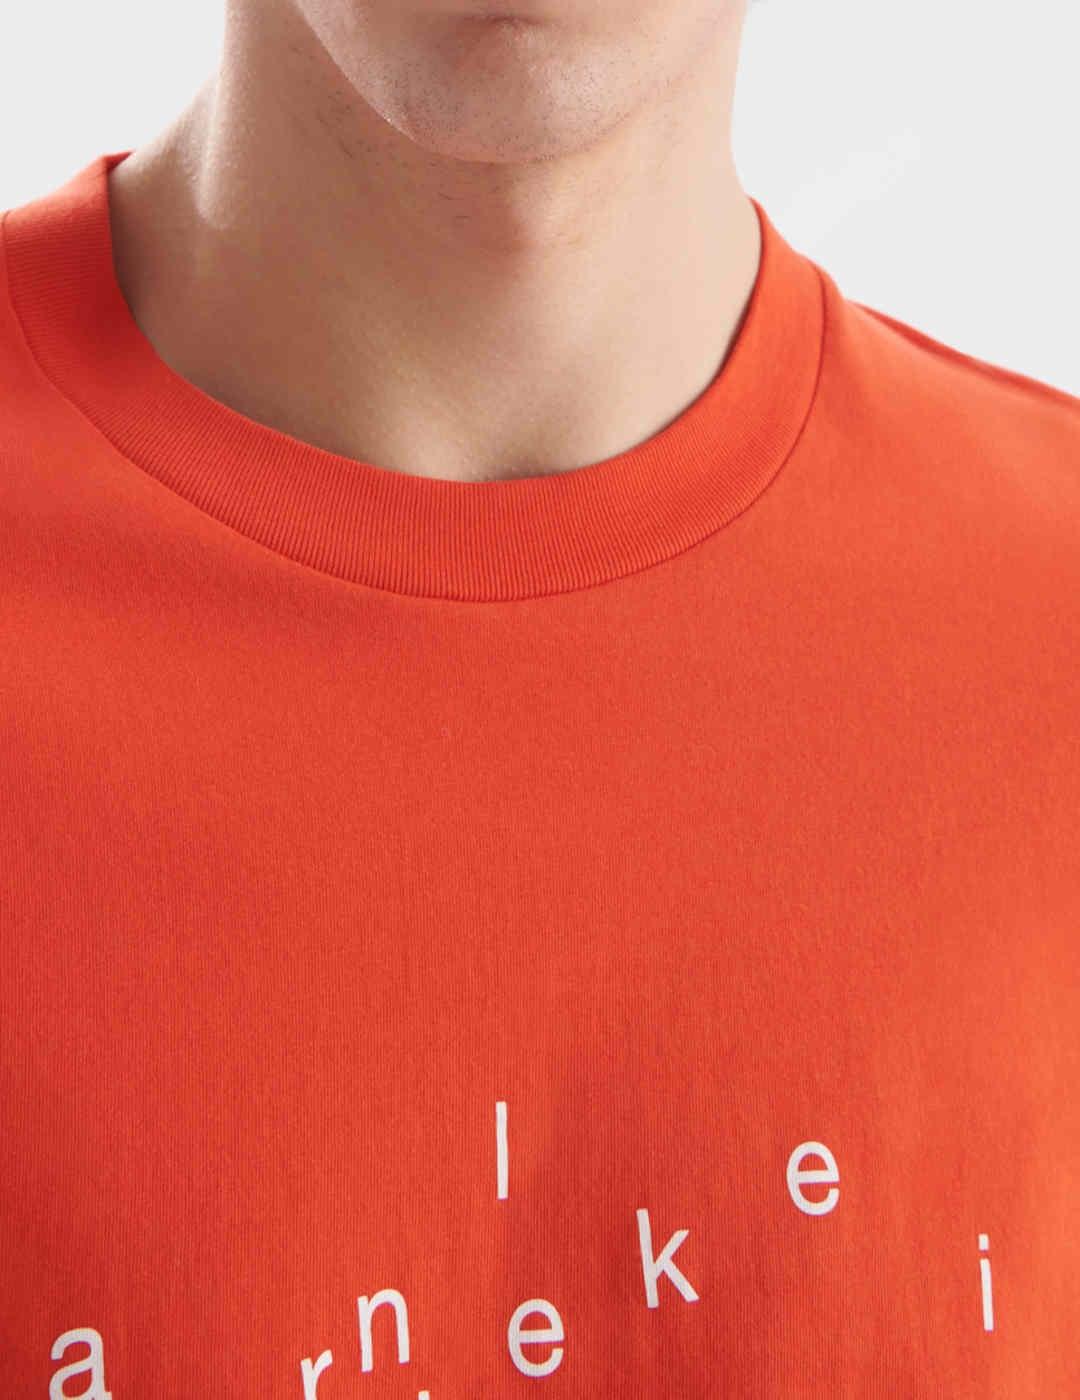 Camiseta Loreak Mendian Letrasnumeros